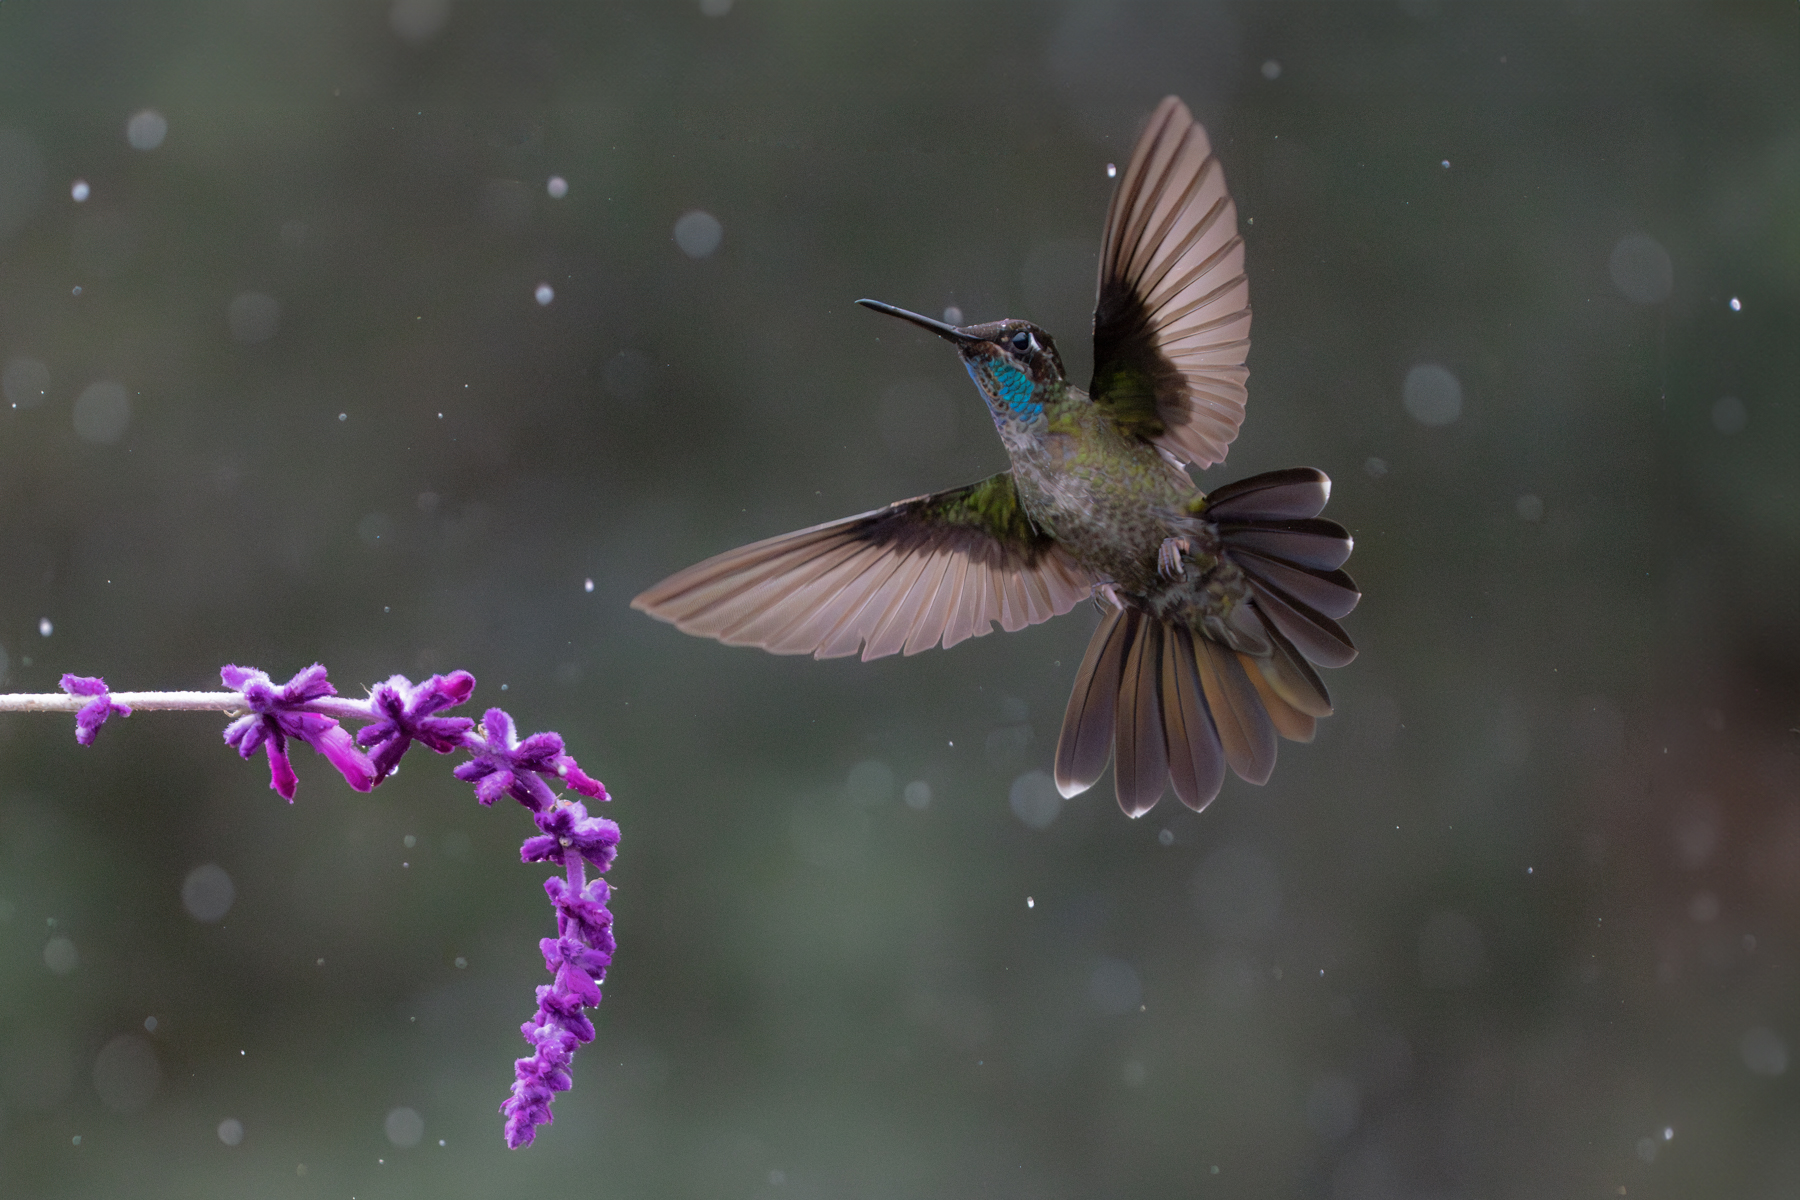 Talamanca Hummingbird flying in the rain (image by Inger Vandyke)